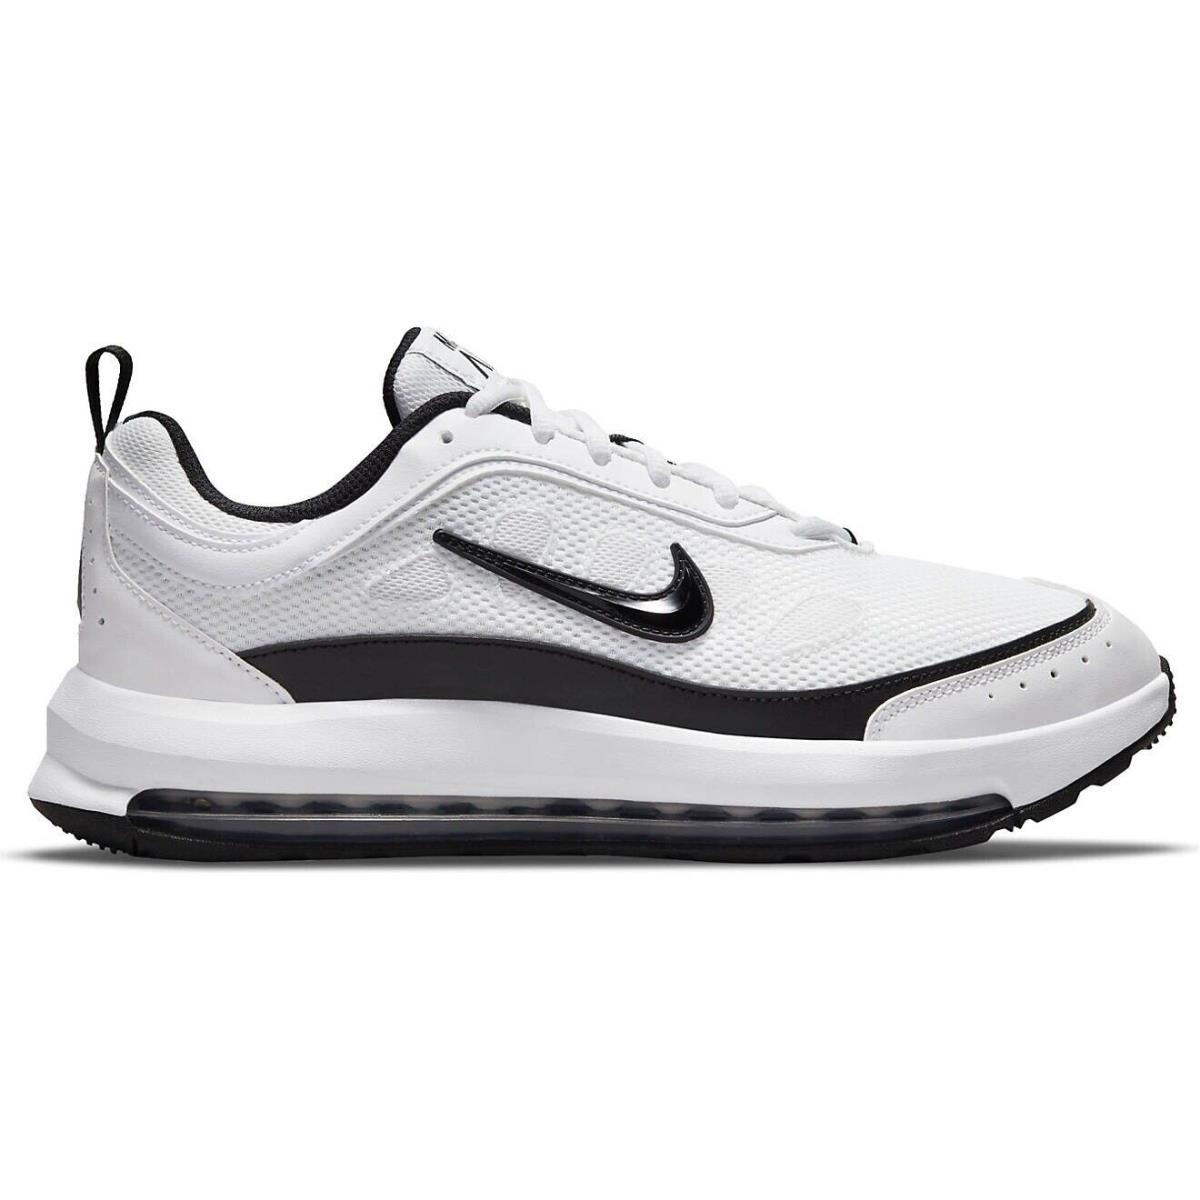 Men Nike Air Max AP Running Shoes Sneakers Size 10.5 White Black CU4826 100 - White